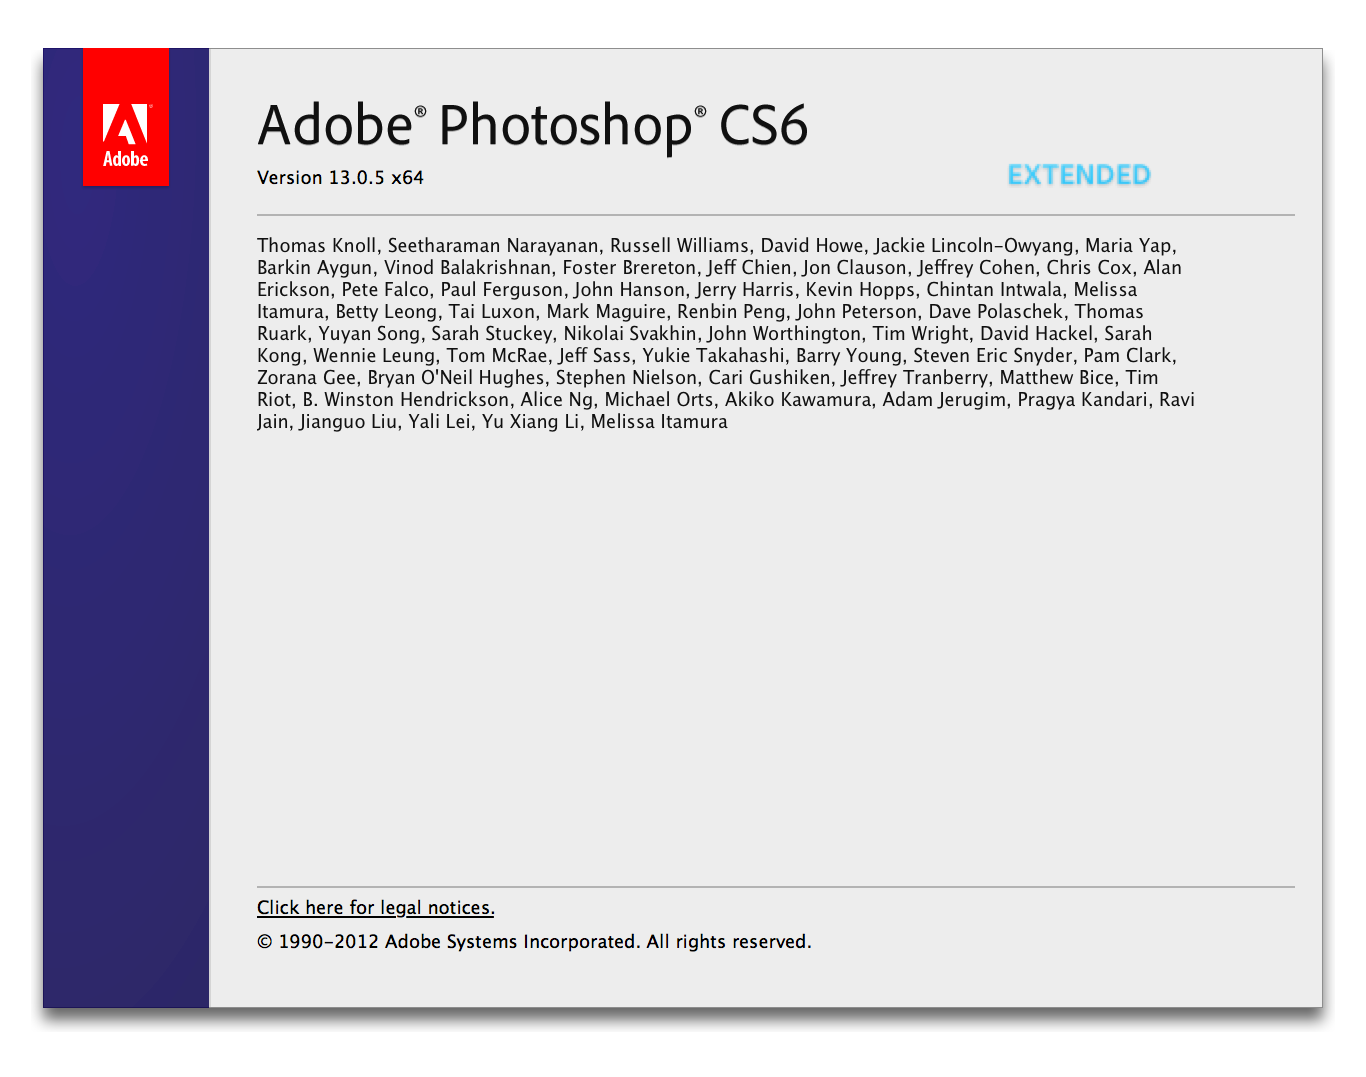 Adobe photoshop cs 8 authorization code download